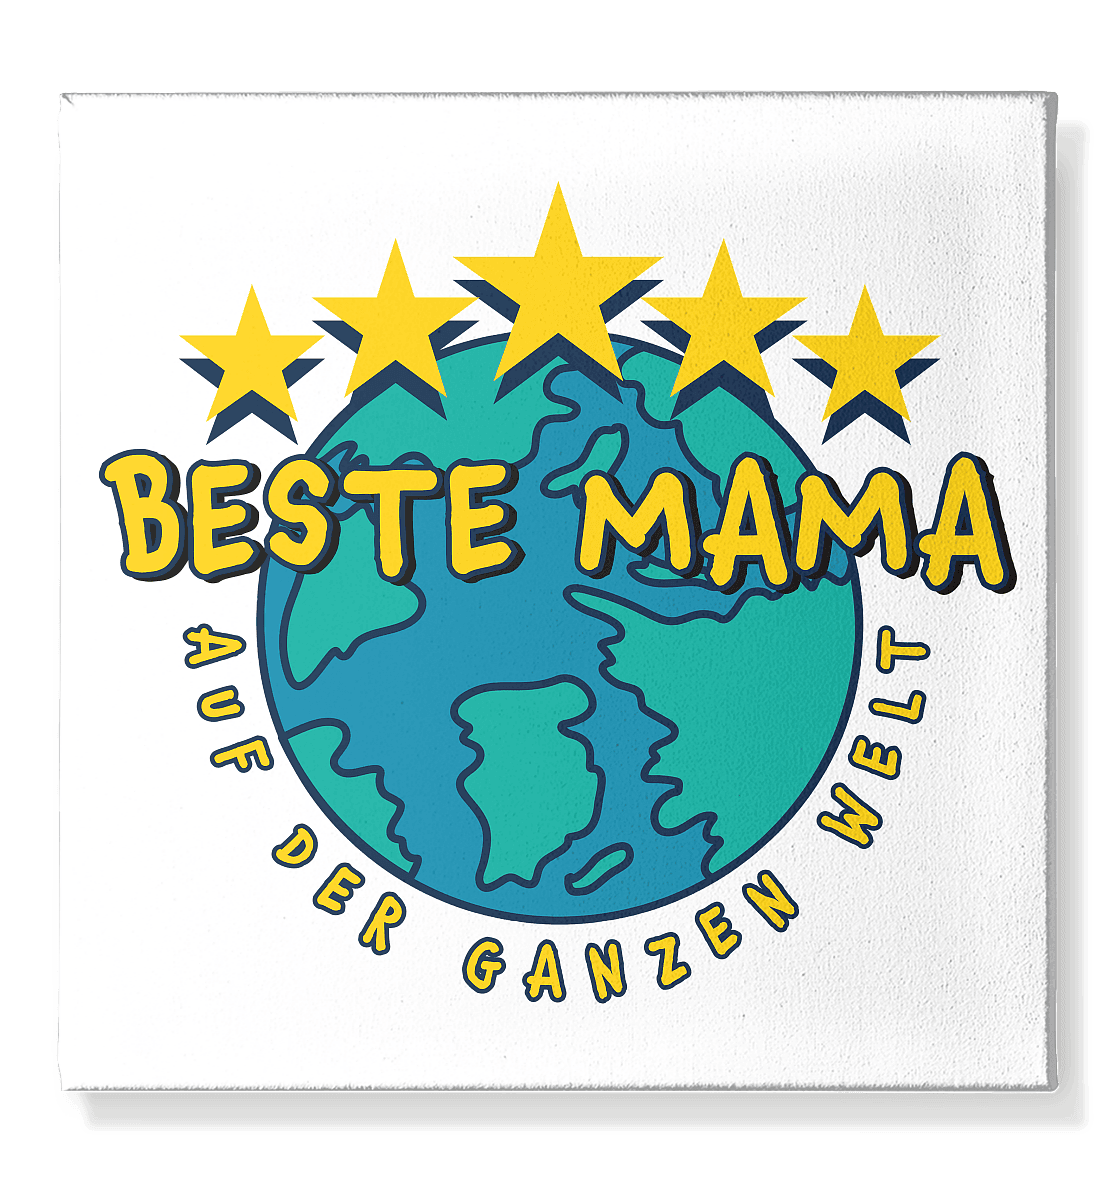 BESTE MAMA - Leinwand 50x50cm - HalloGeschenk.de